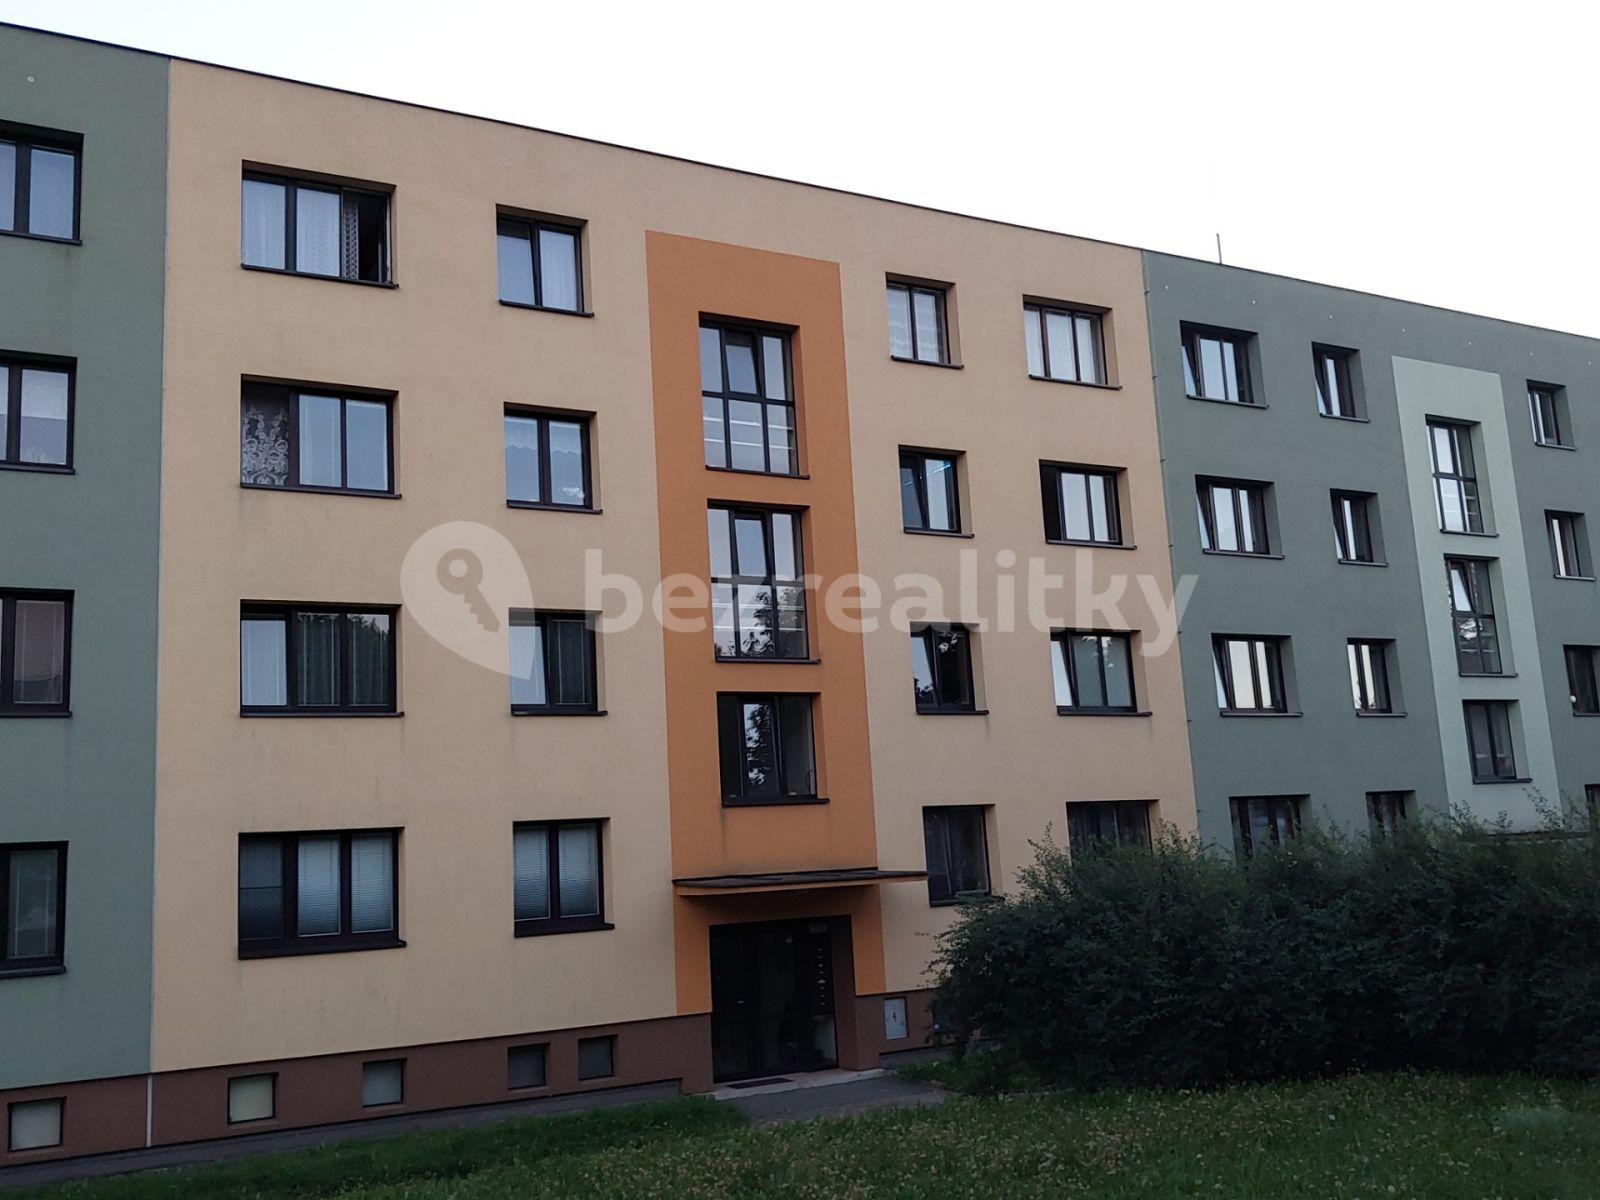 Predaj bytu 3-izbový 84 m², Rašínova, Nové Město nad Metují, Královéhradecký kraj